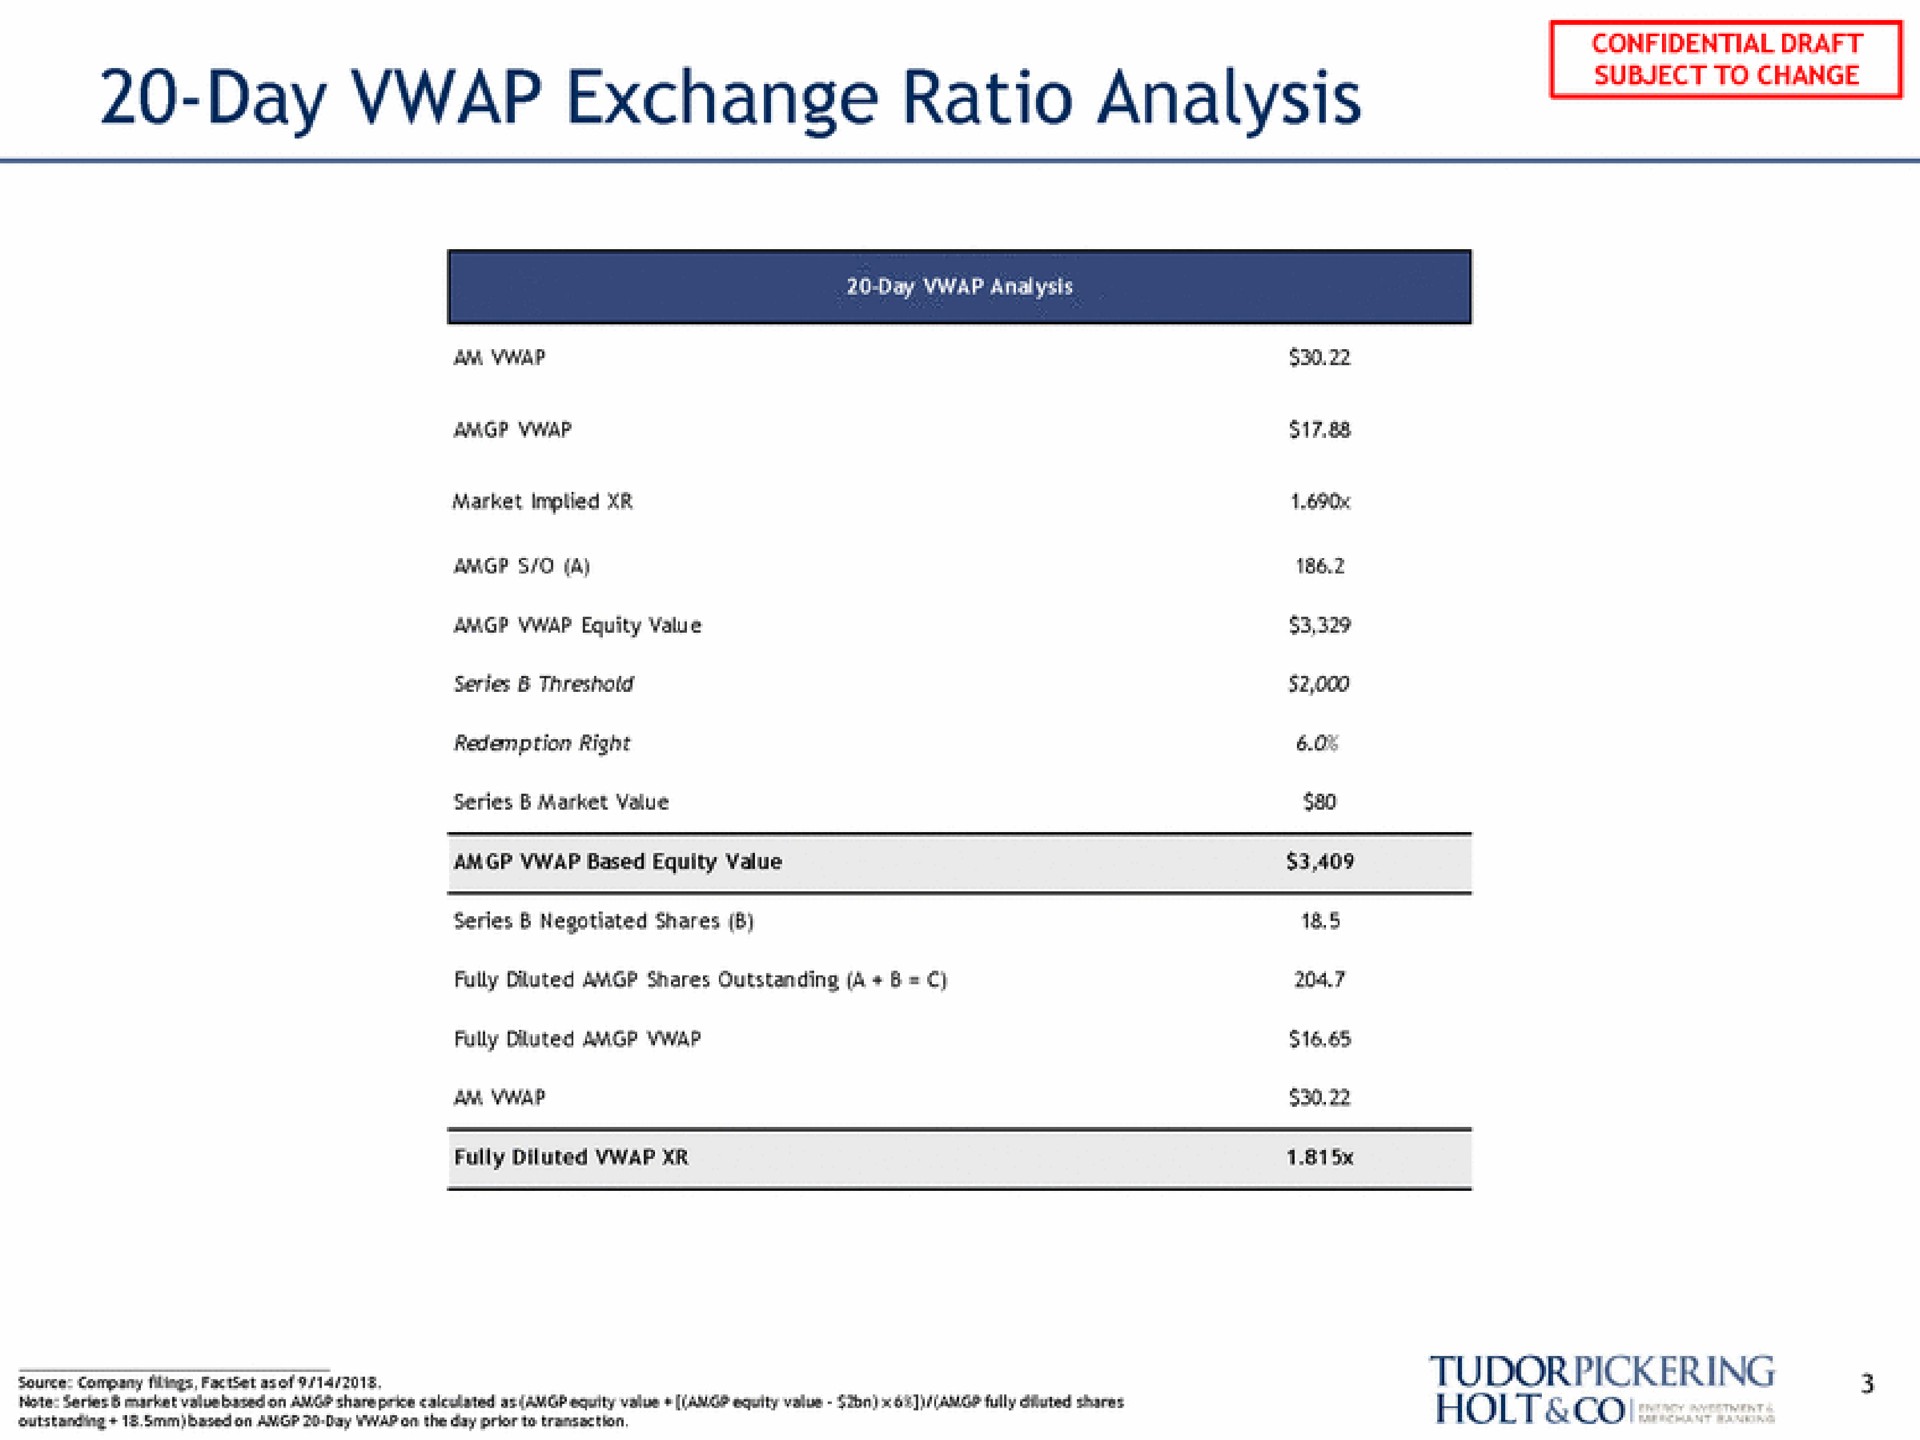 day exchange ratio analysis | Tudor, Pickering, Holt & Co